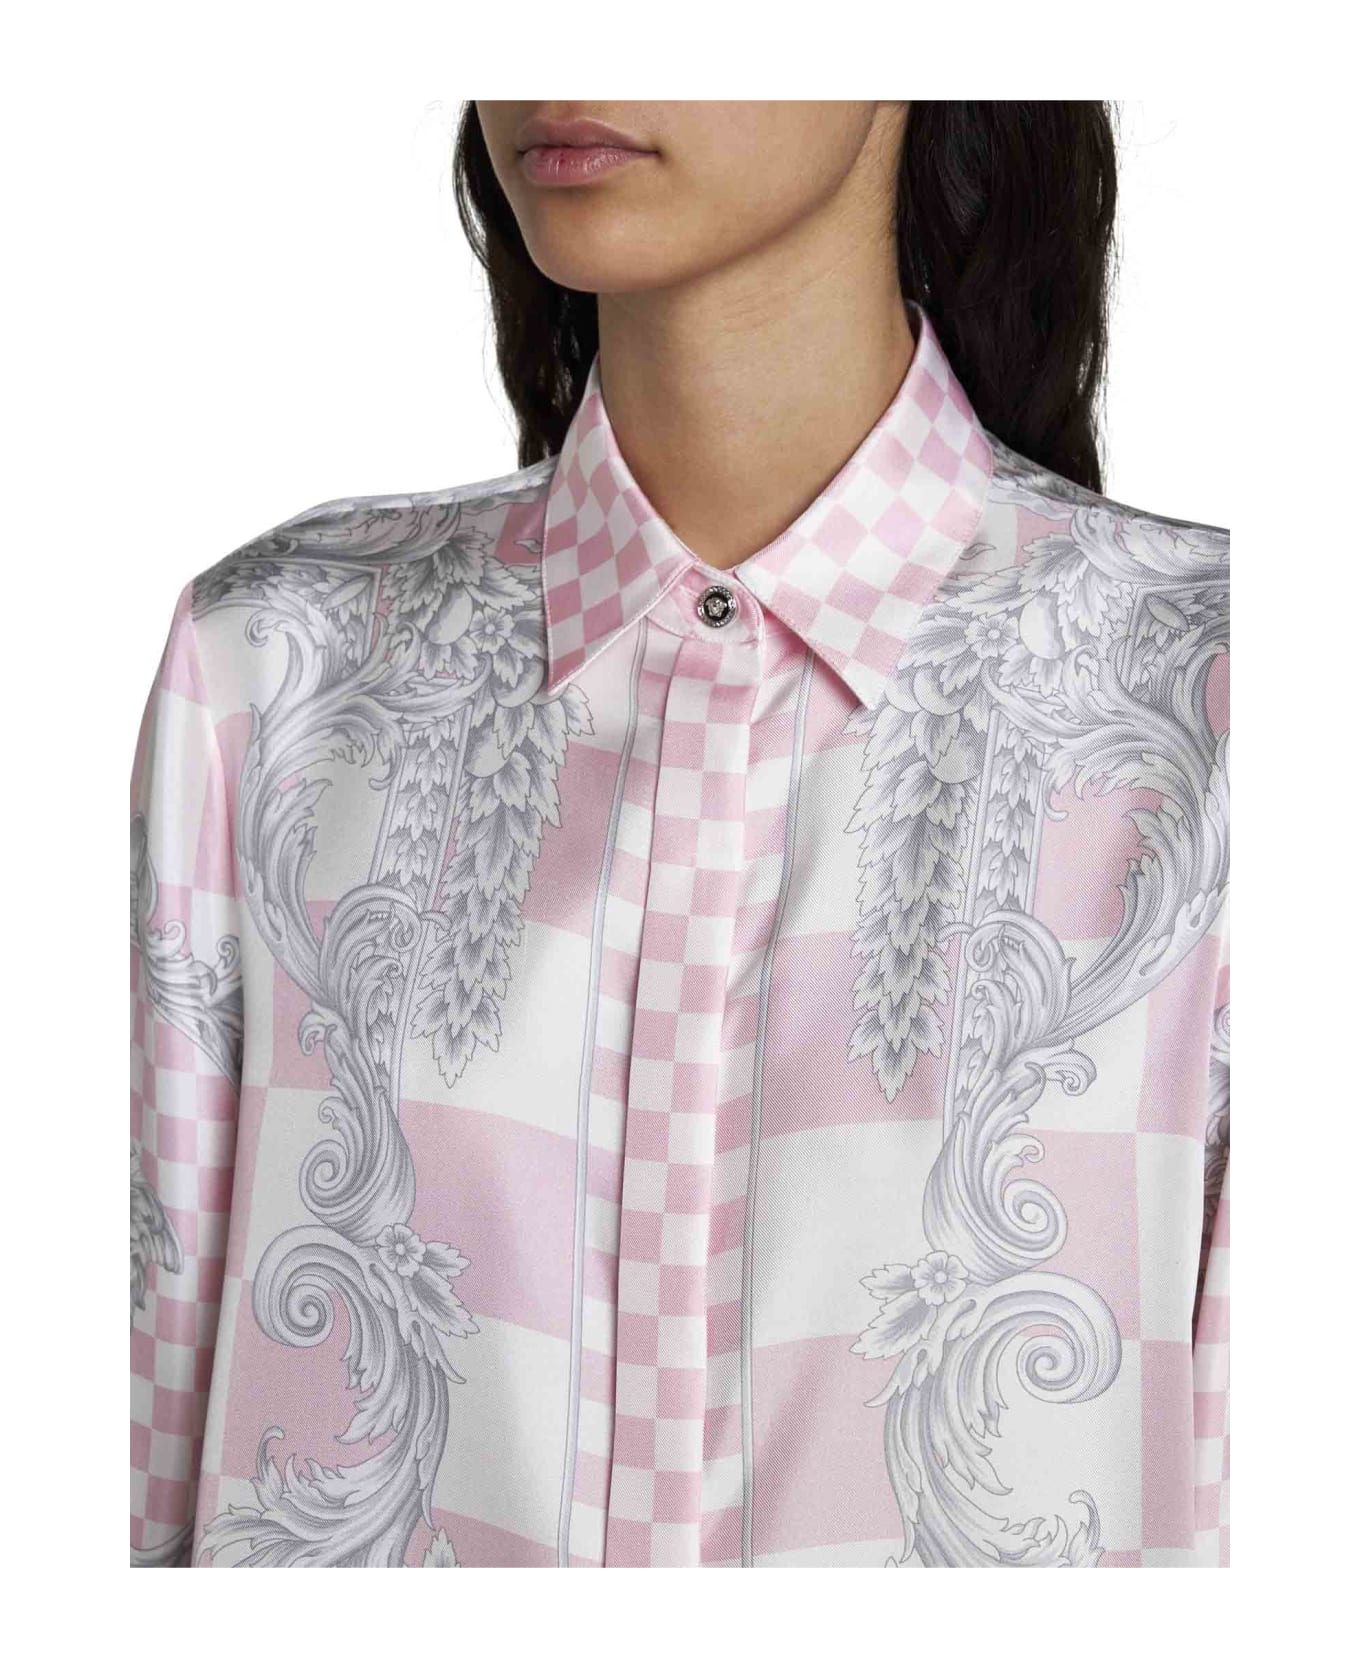 Versace Shirt - Pastel pink + white + silver